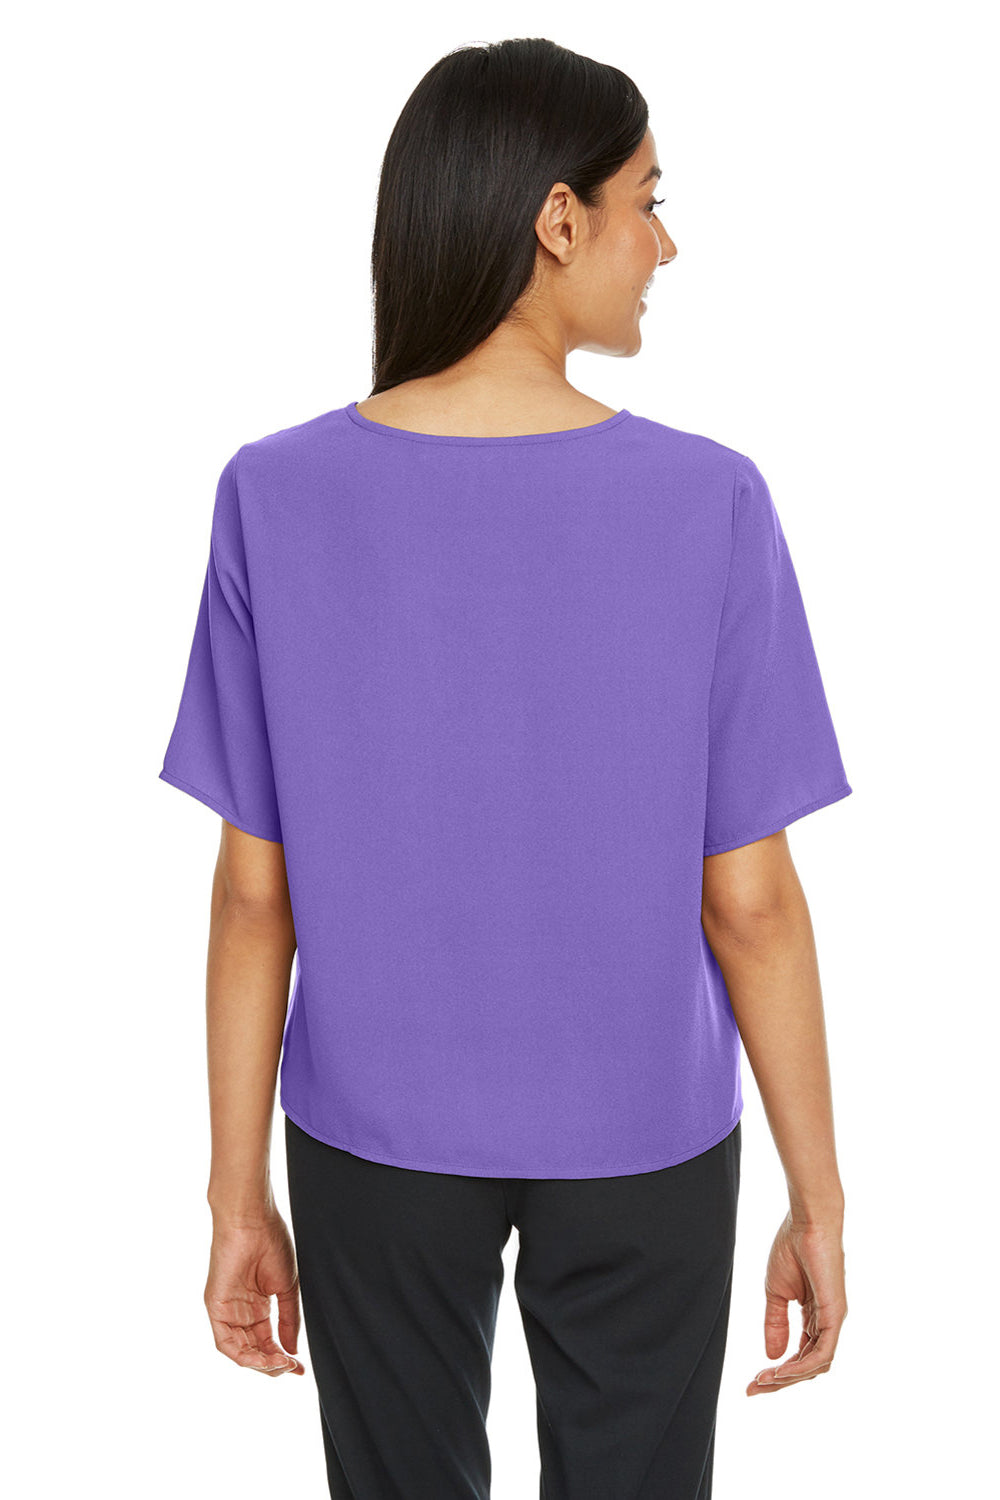 Devon & Jones DP617W Womens Perfect Fit Tie Front Short Sleeve Blouse Grape Purple Back